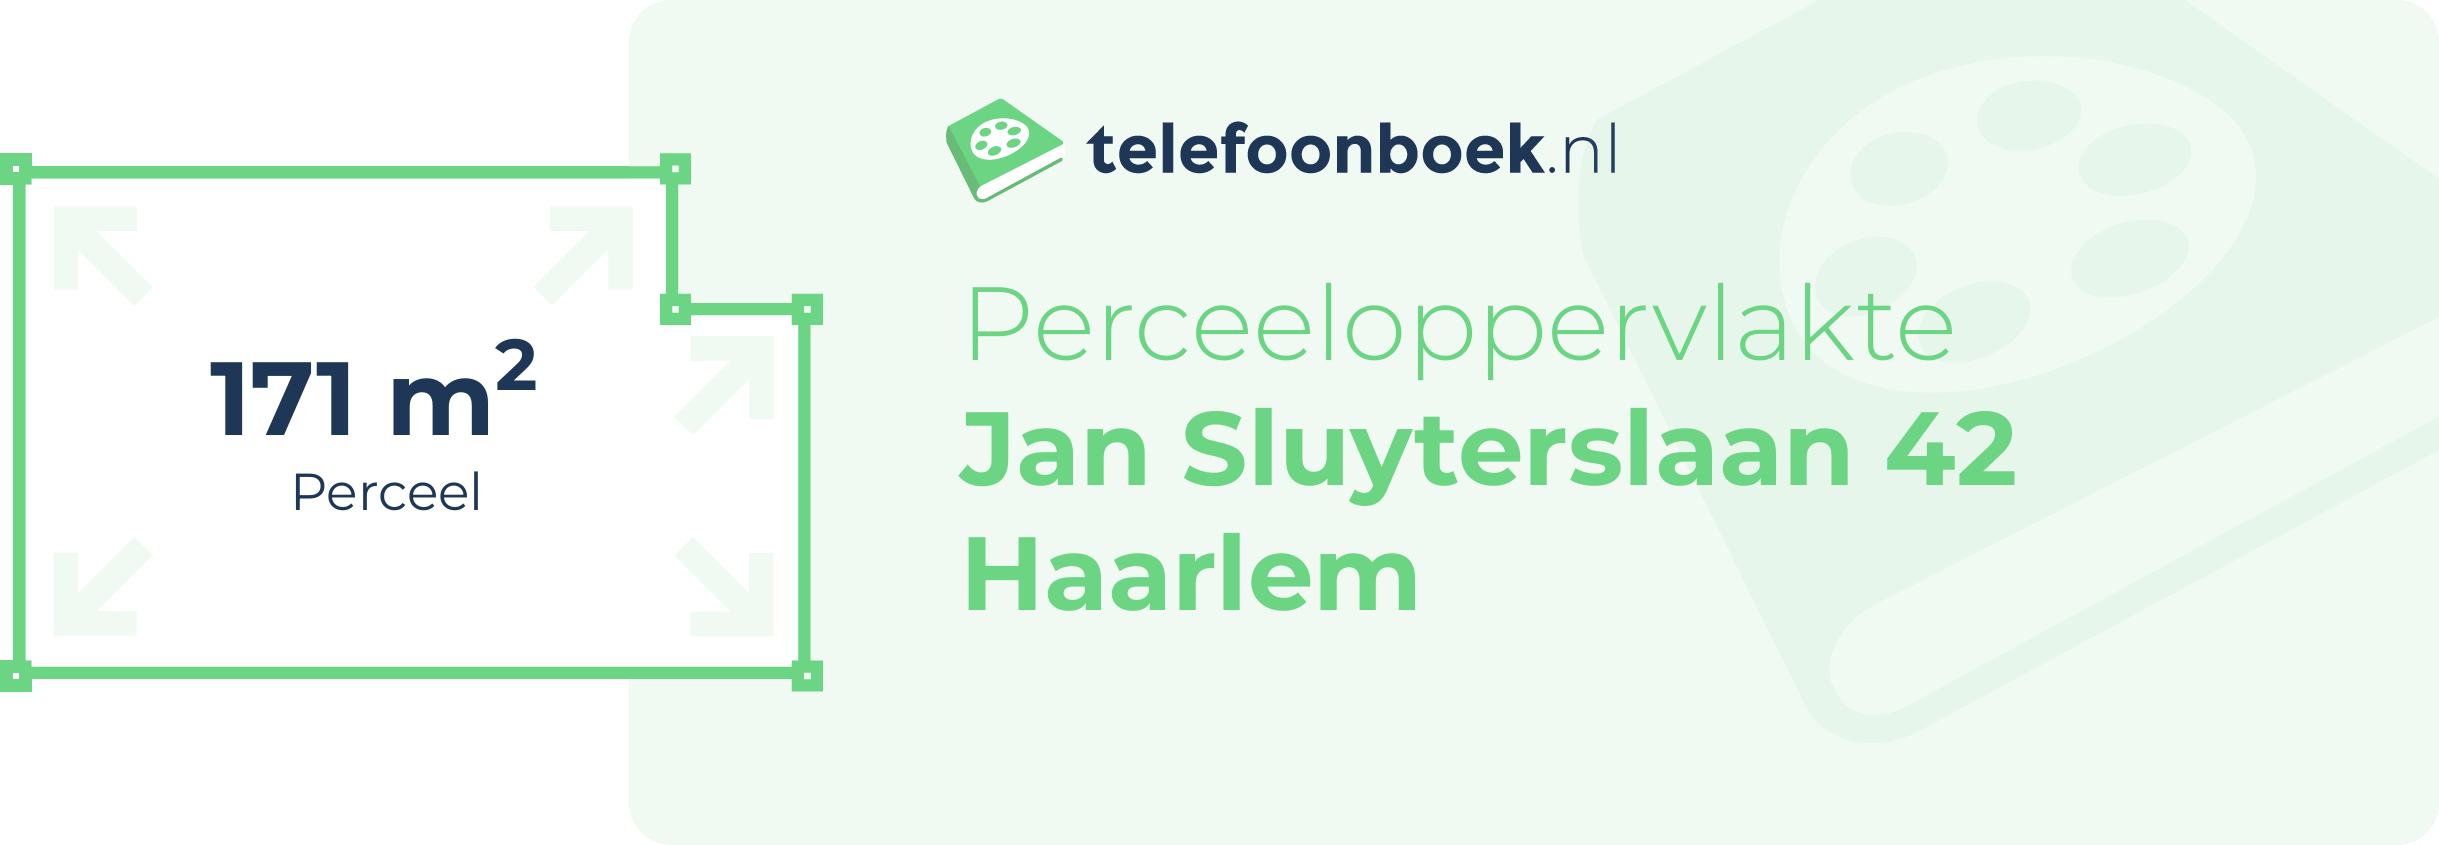 Perceeloppervlakte Jan Sluyterslaan 42 Haarlem